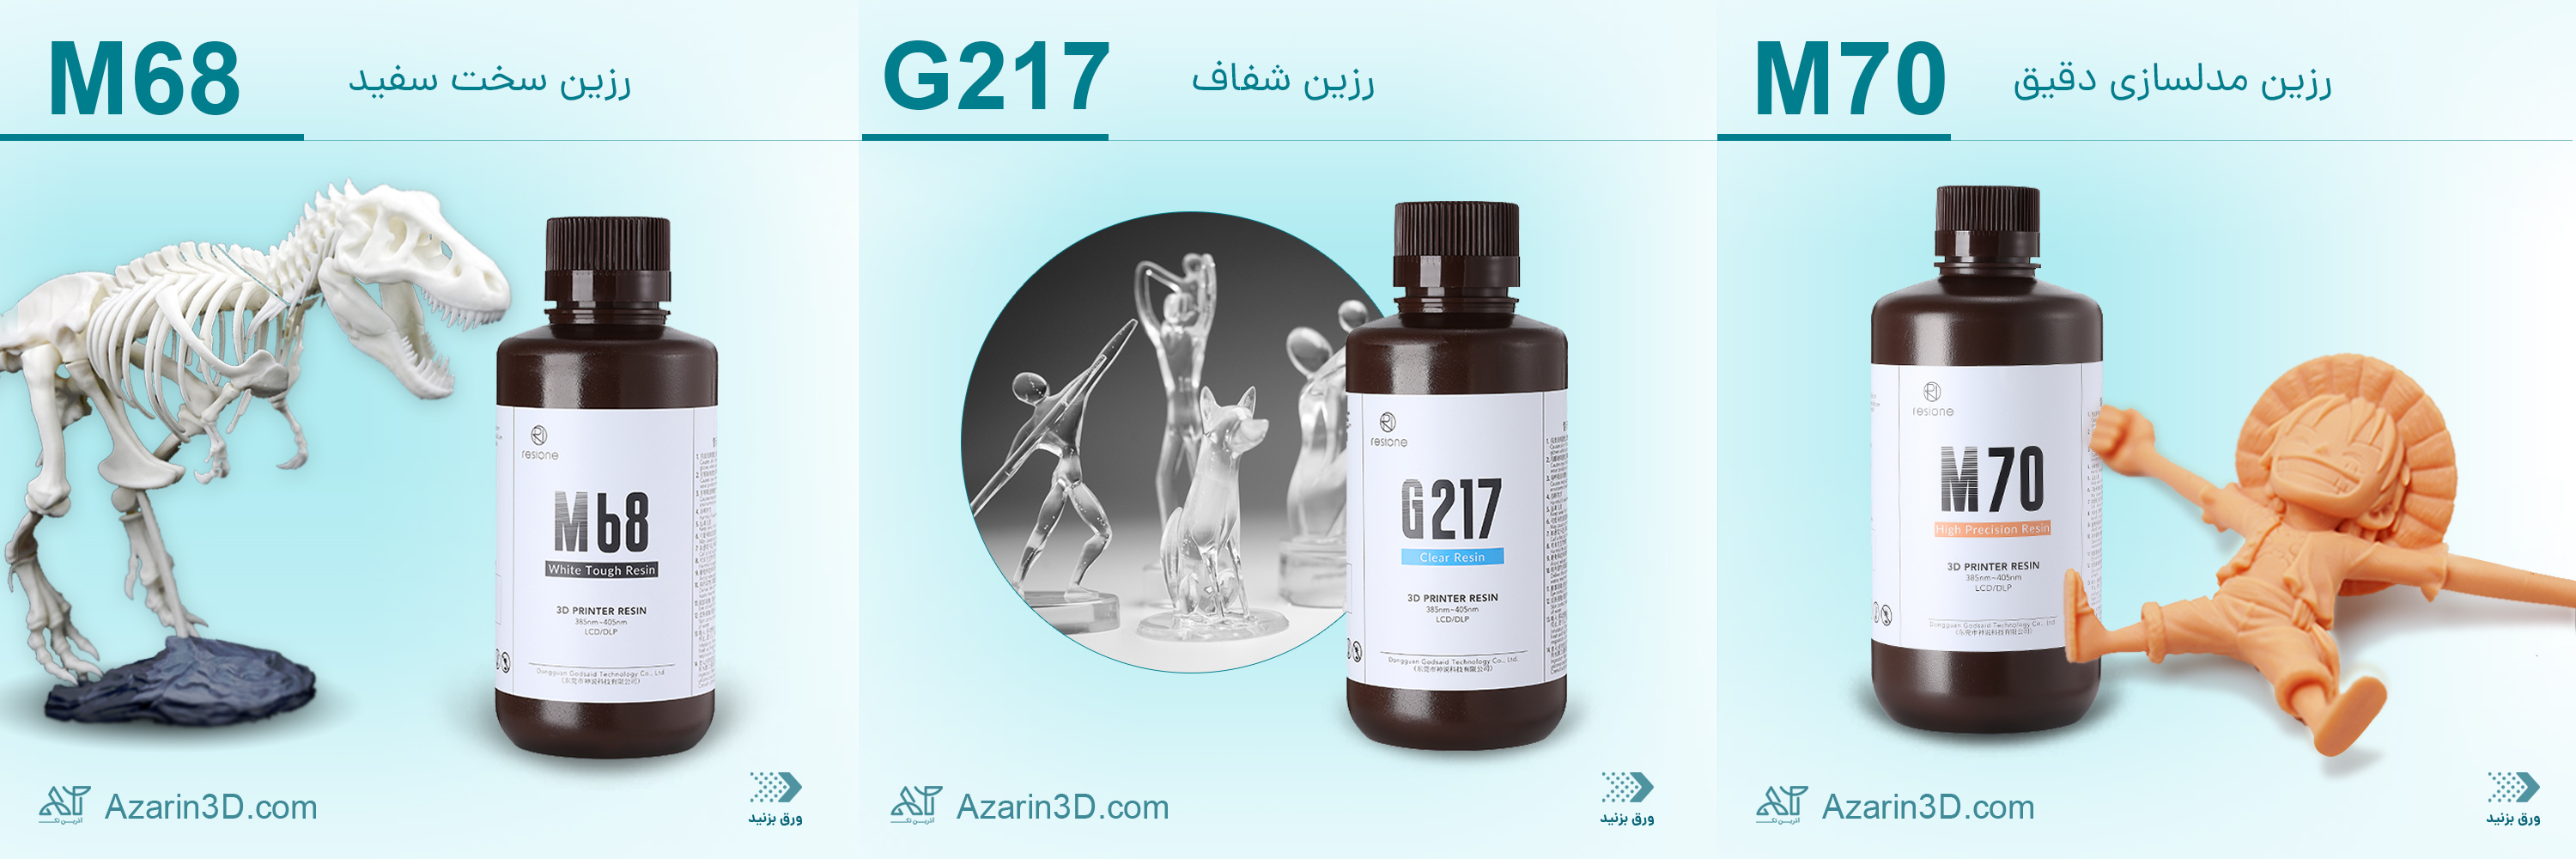 G217 resione 3dprinter resin